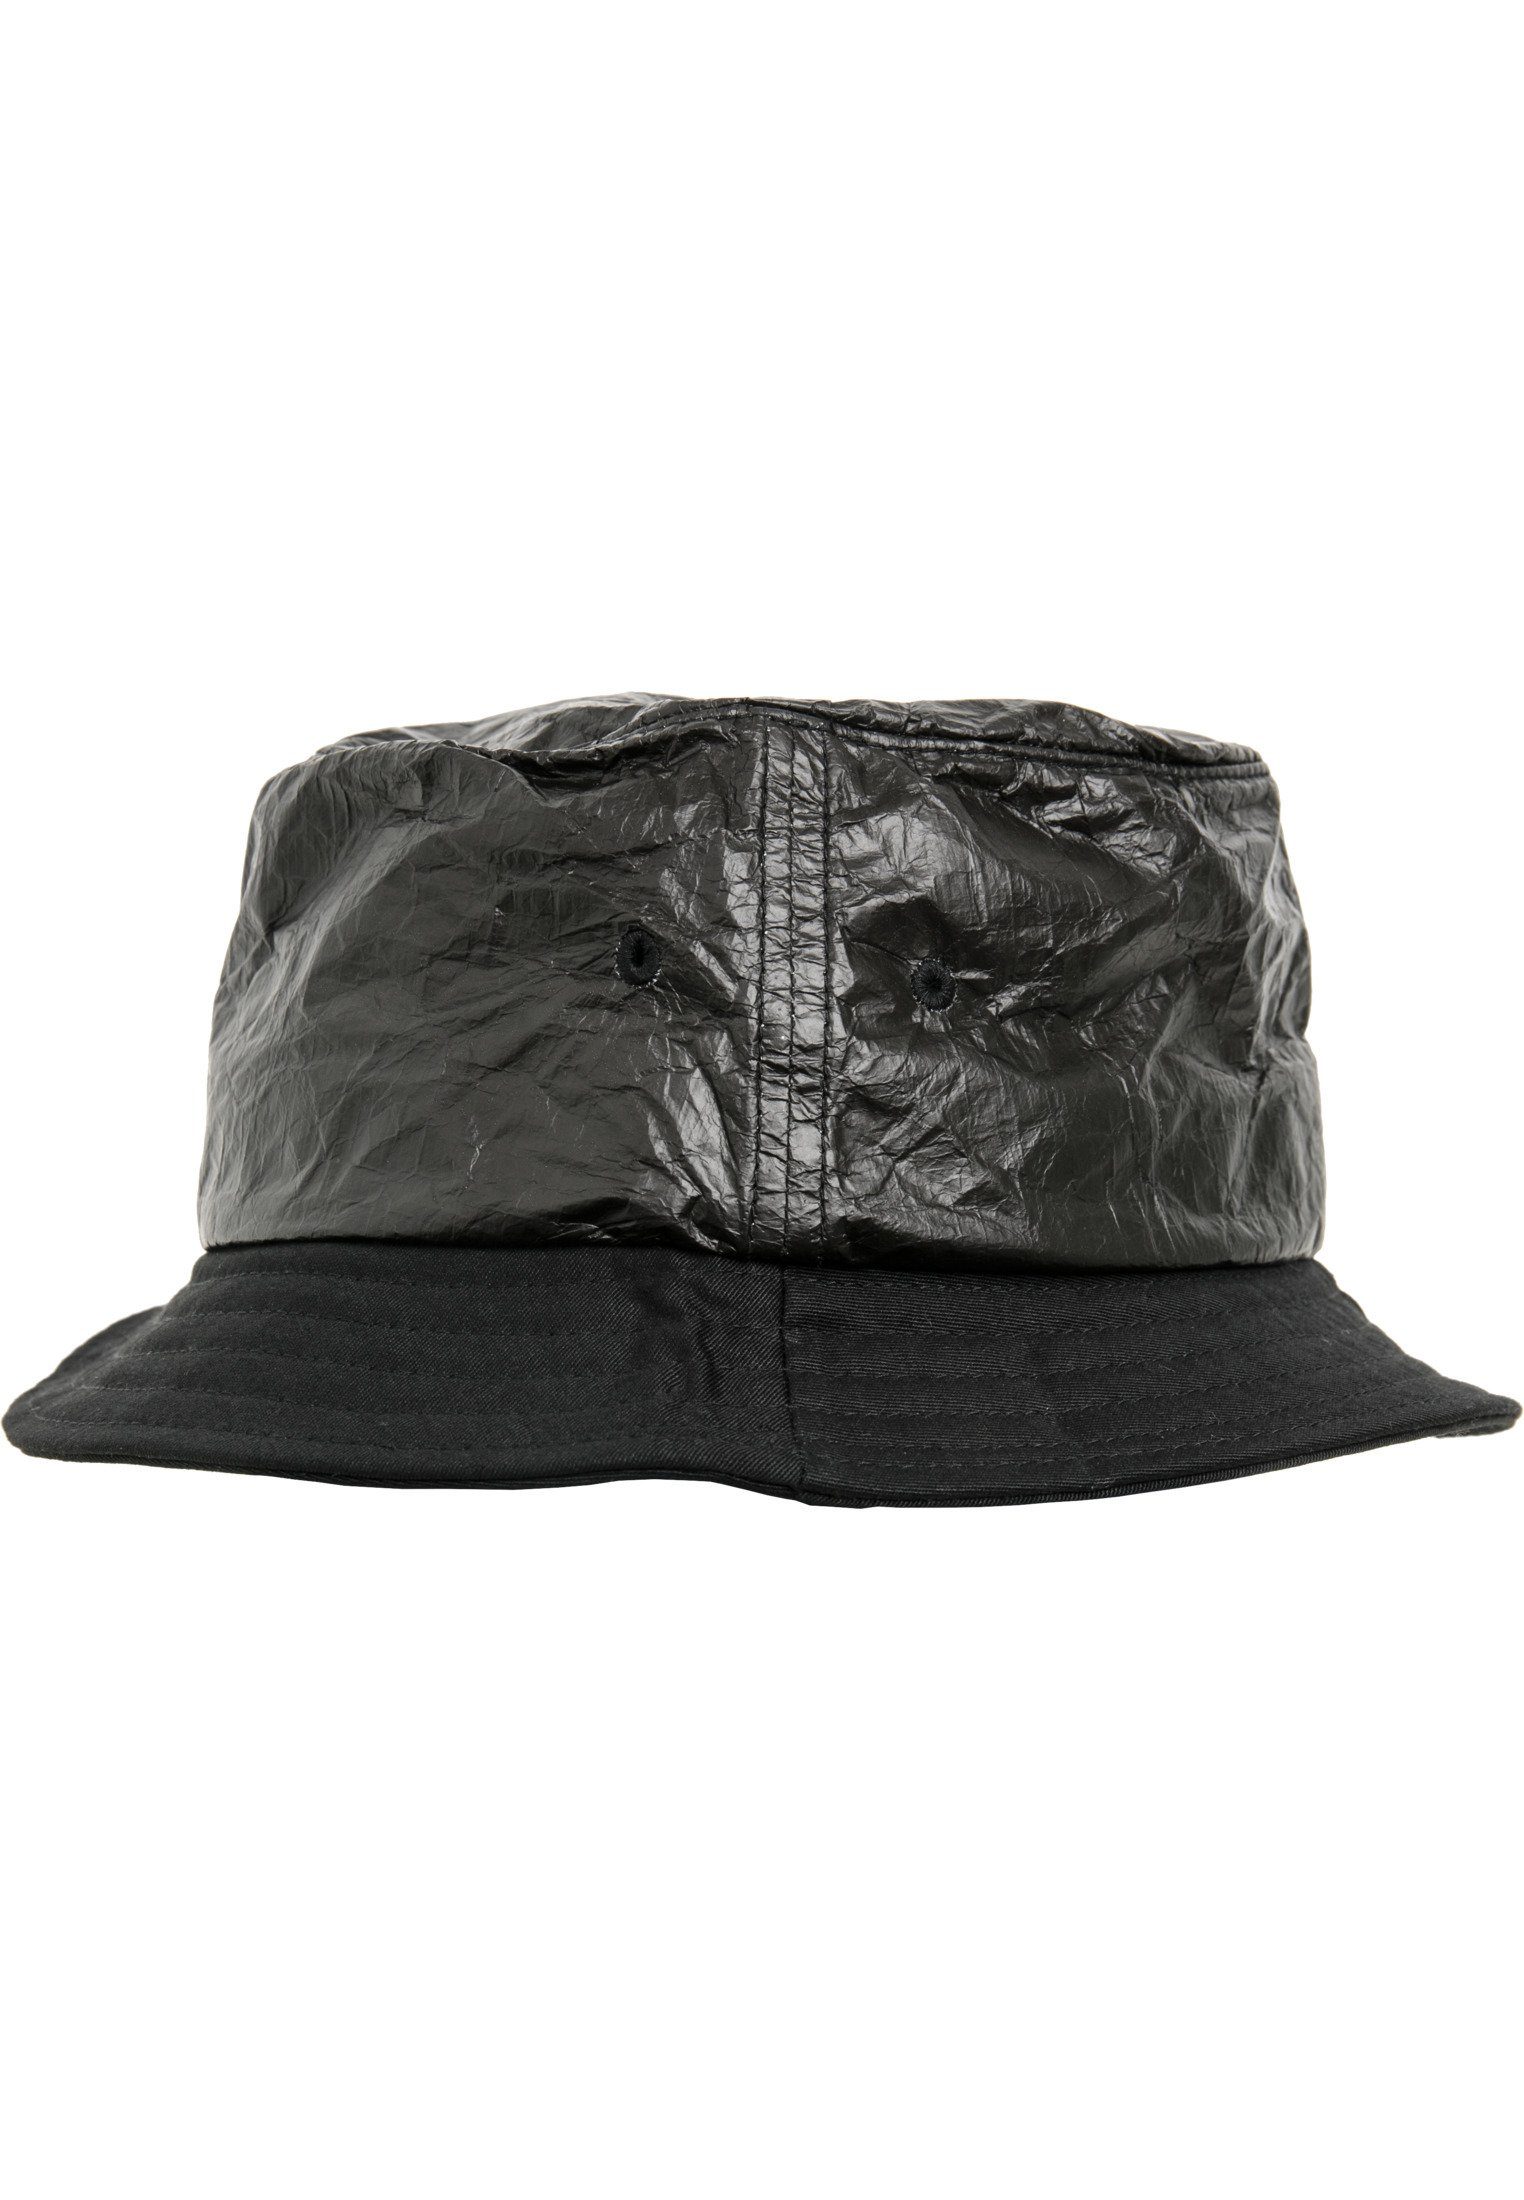 Flexfit Flex Bucket Hat Paper Crinkled Bucket black Hat Cap